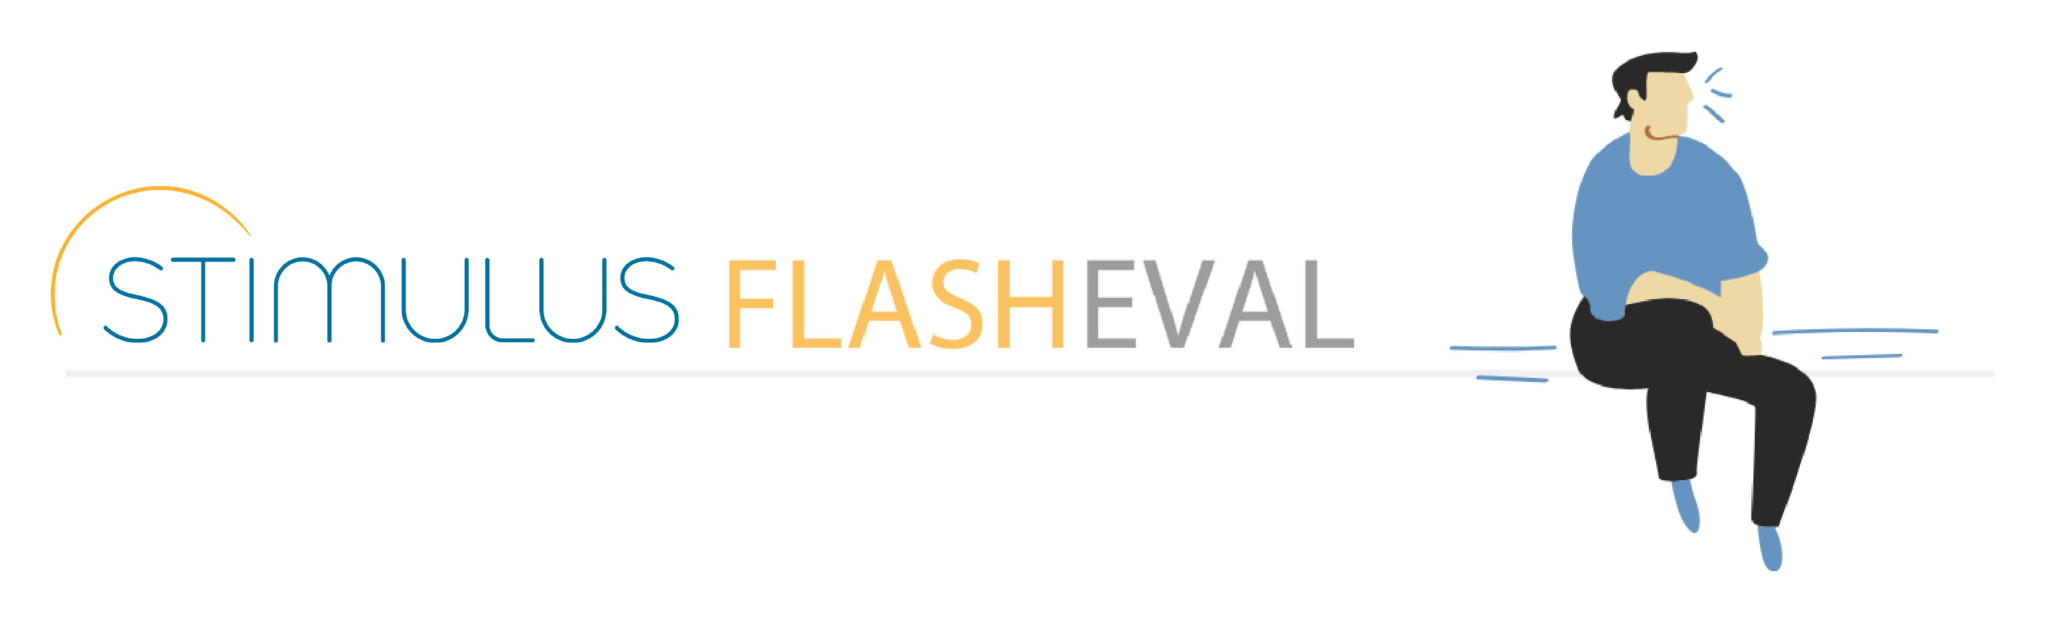 FlashEval-01